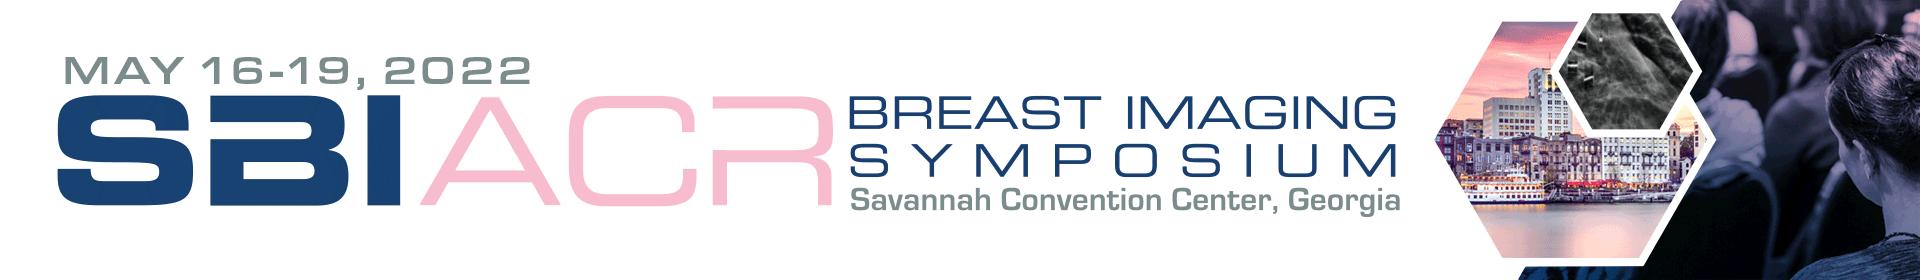 2022 SBI/ACR Breast Imaging Symposium Event Banner